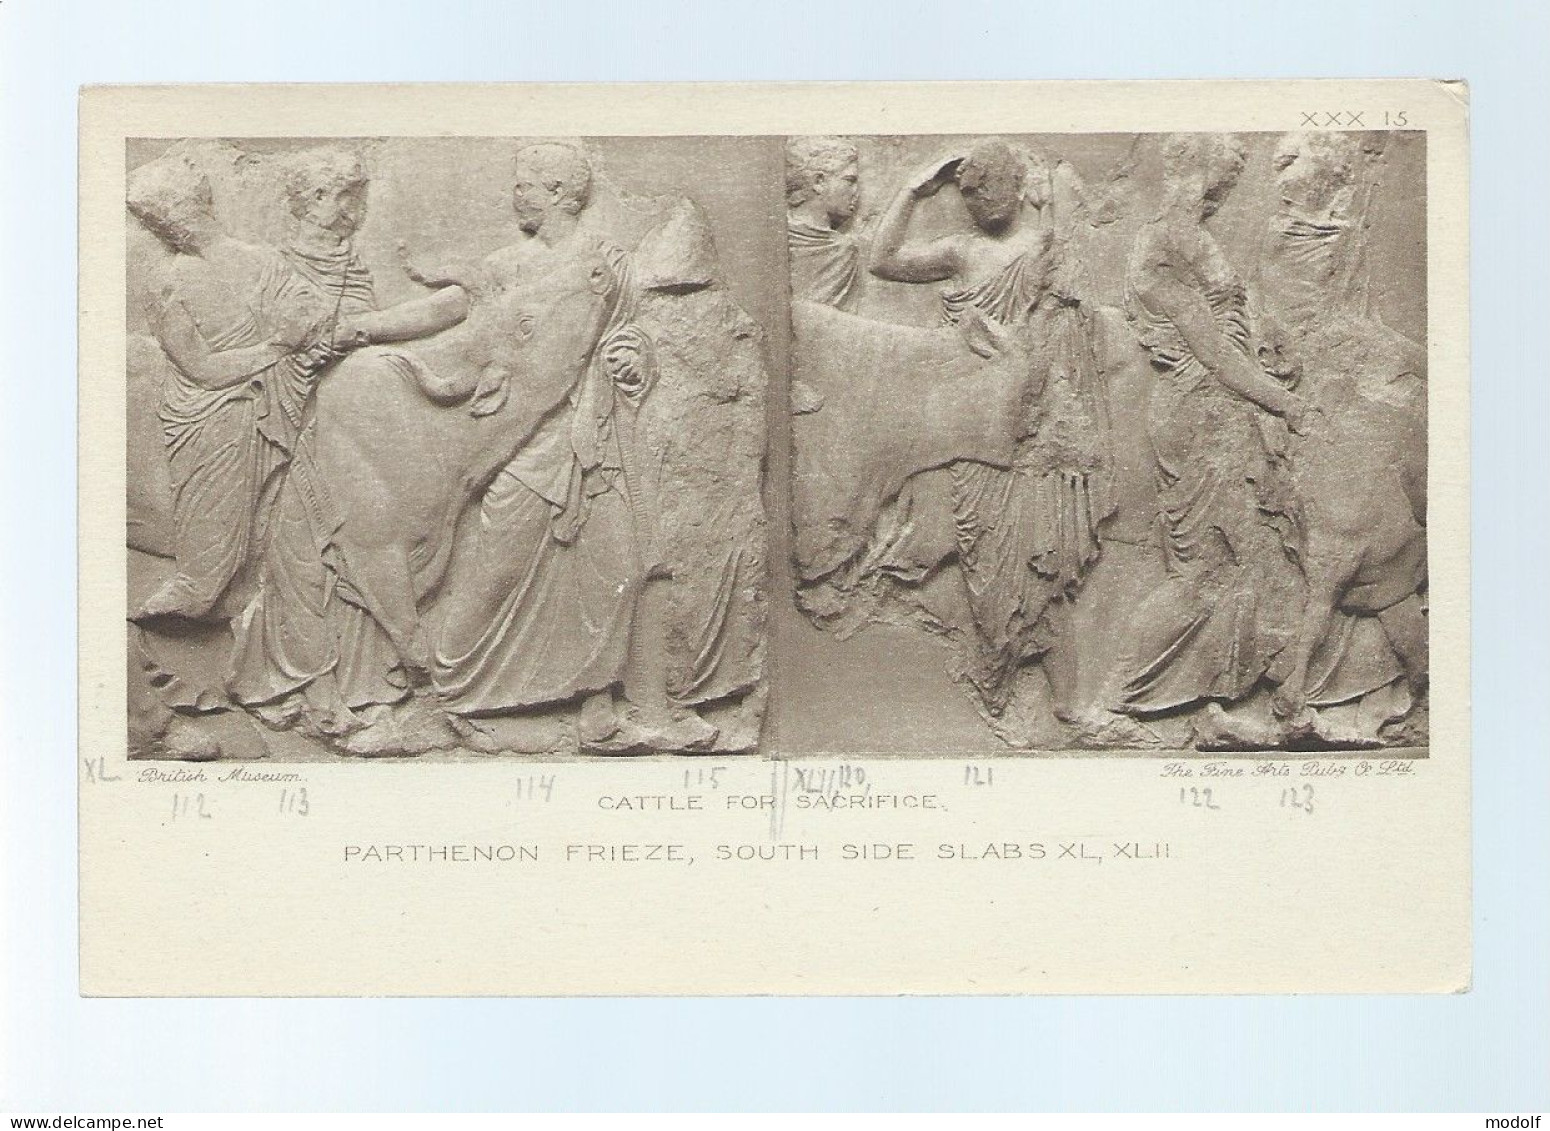 CPA - Arts - Sculptures - British Museum - Parthenon Frieze, South Side Slabs XL,XLII - Non Circulée - Sculptures